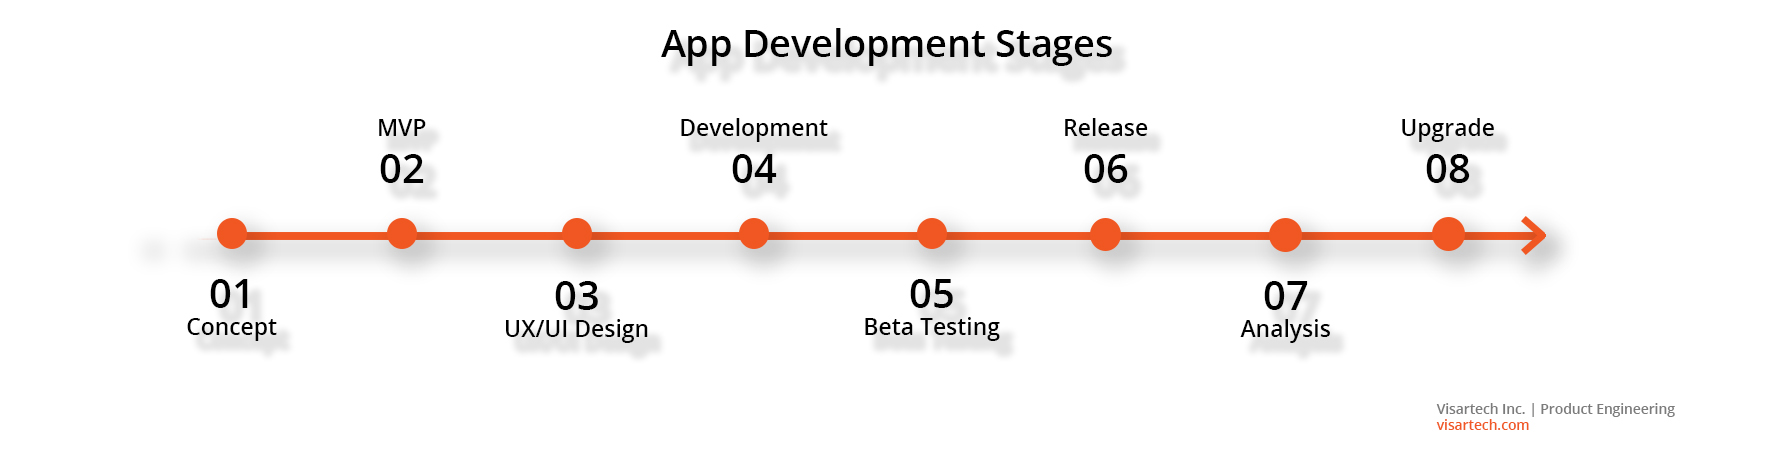 App Development Stages - Visartech Blog